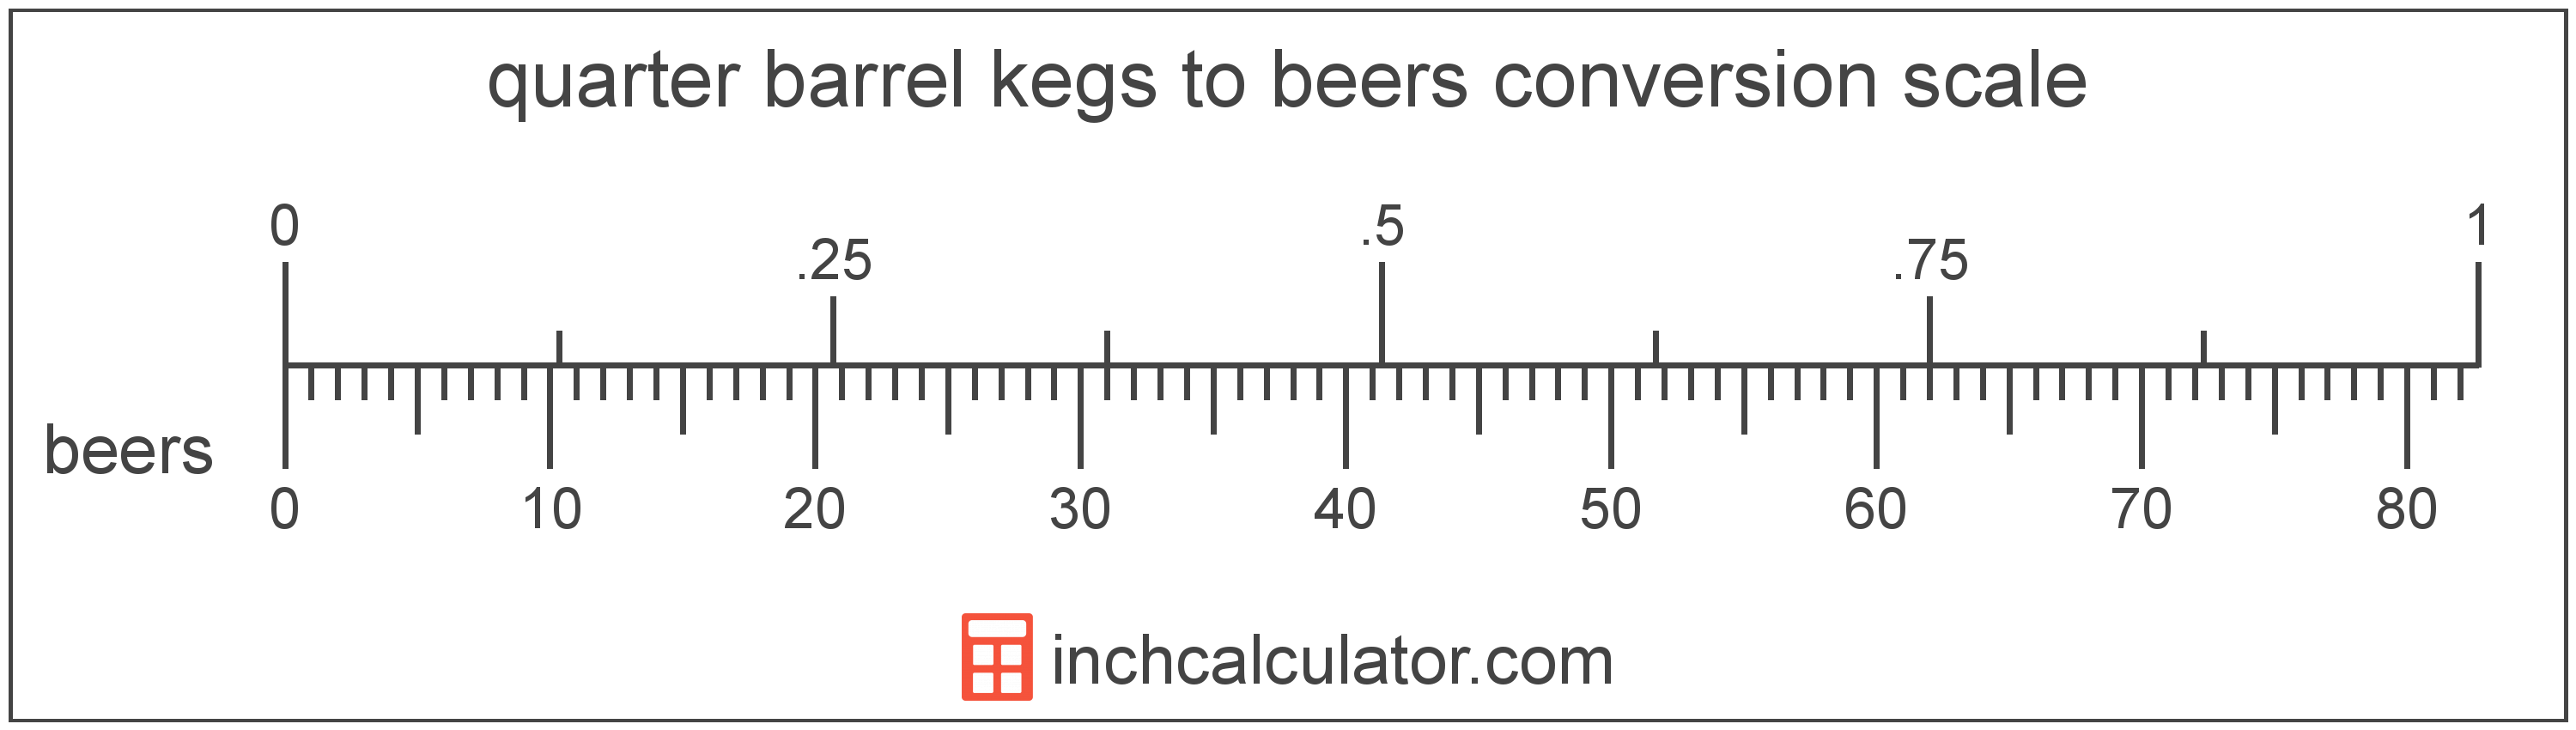 quarter-barrel-kegs-to-beers-conversion-inch-calculator